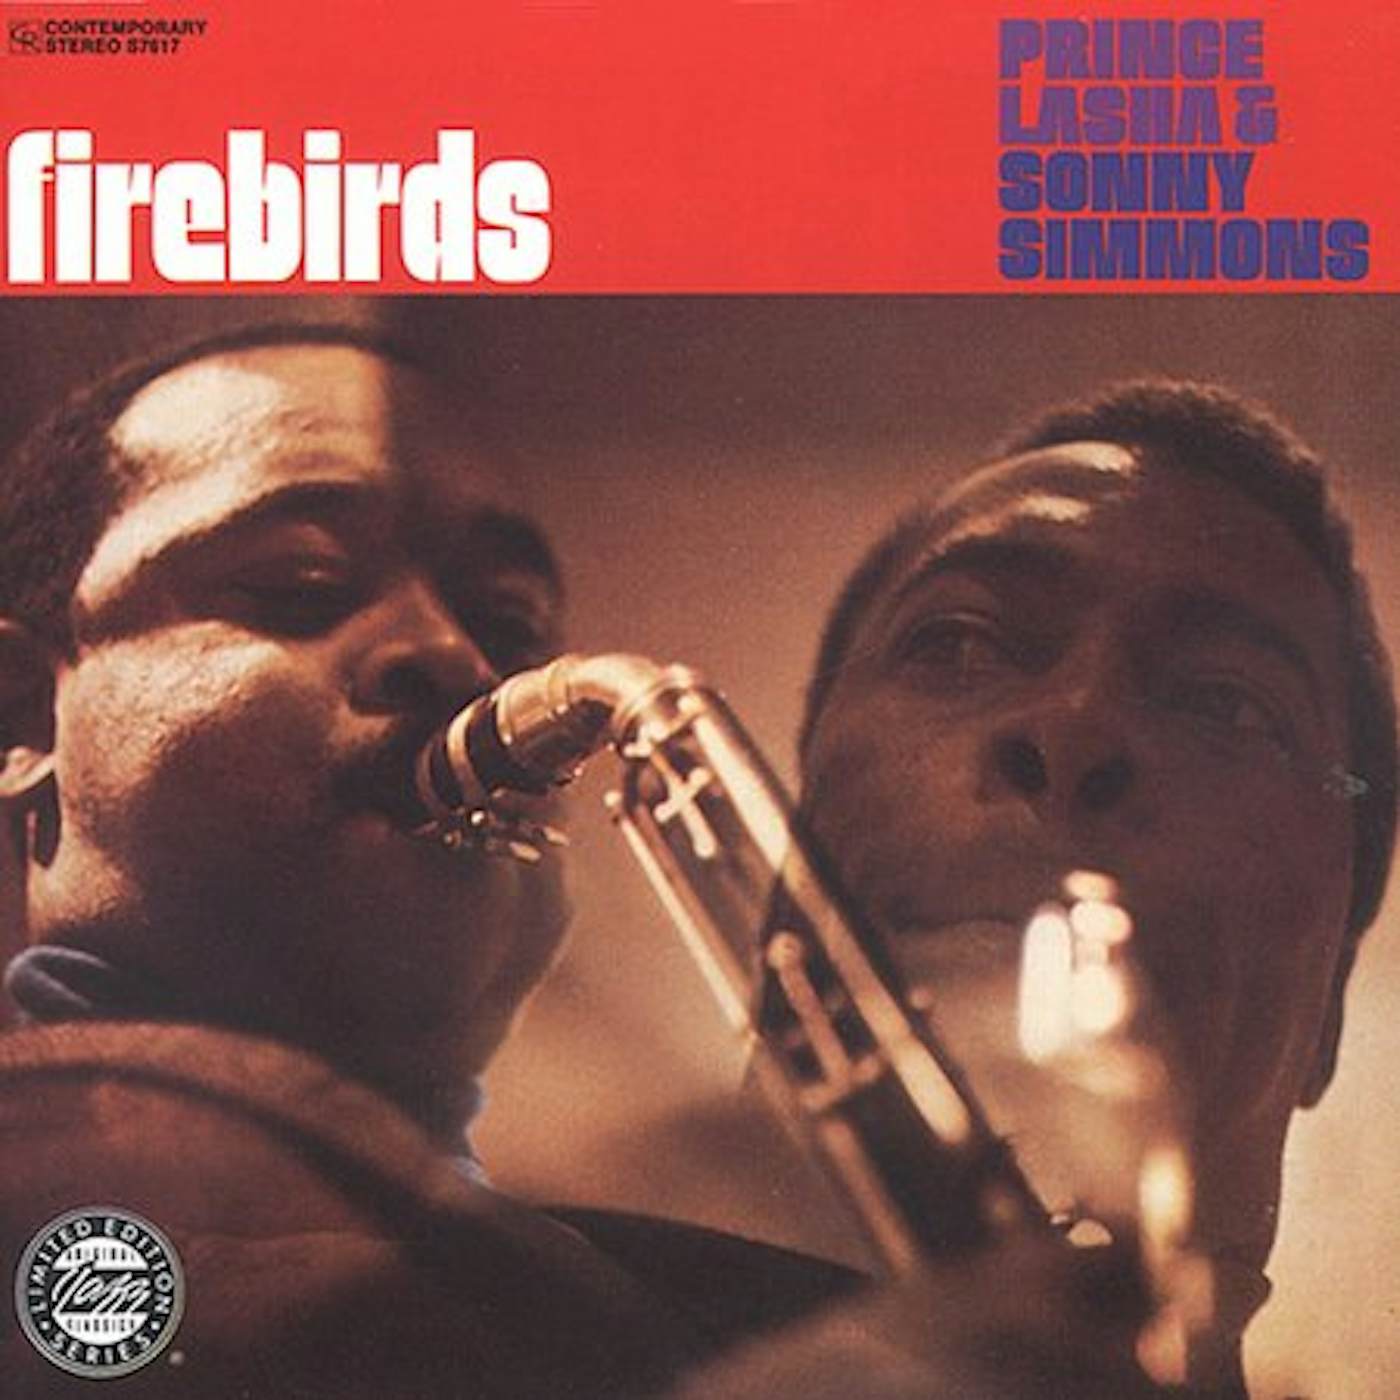 Prince Lasha / Sonny Simmons FIREBIRDS CD